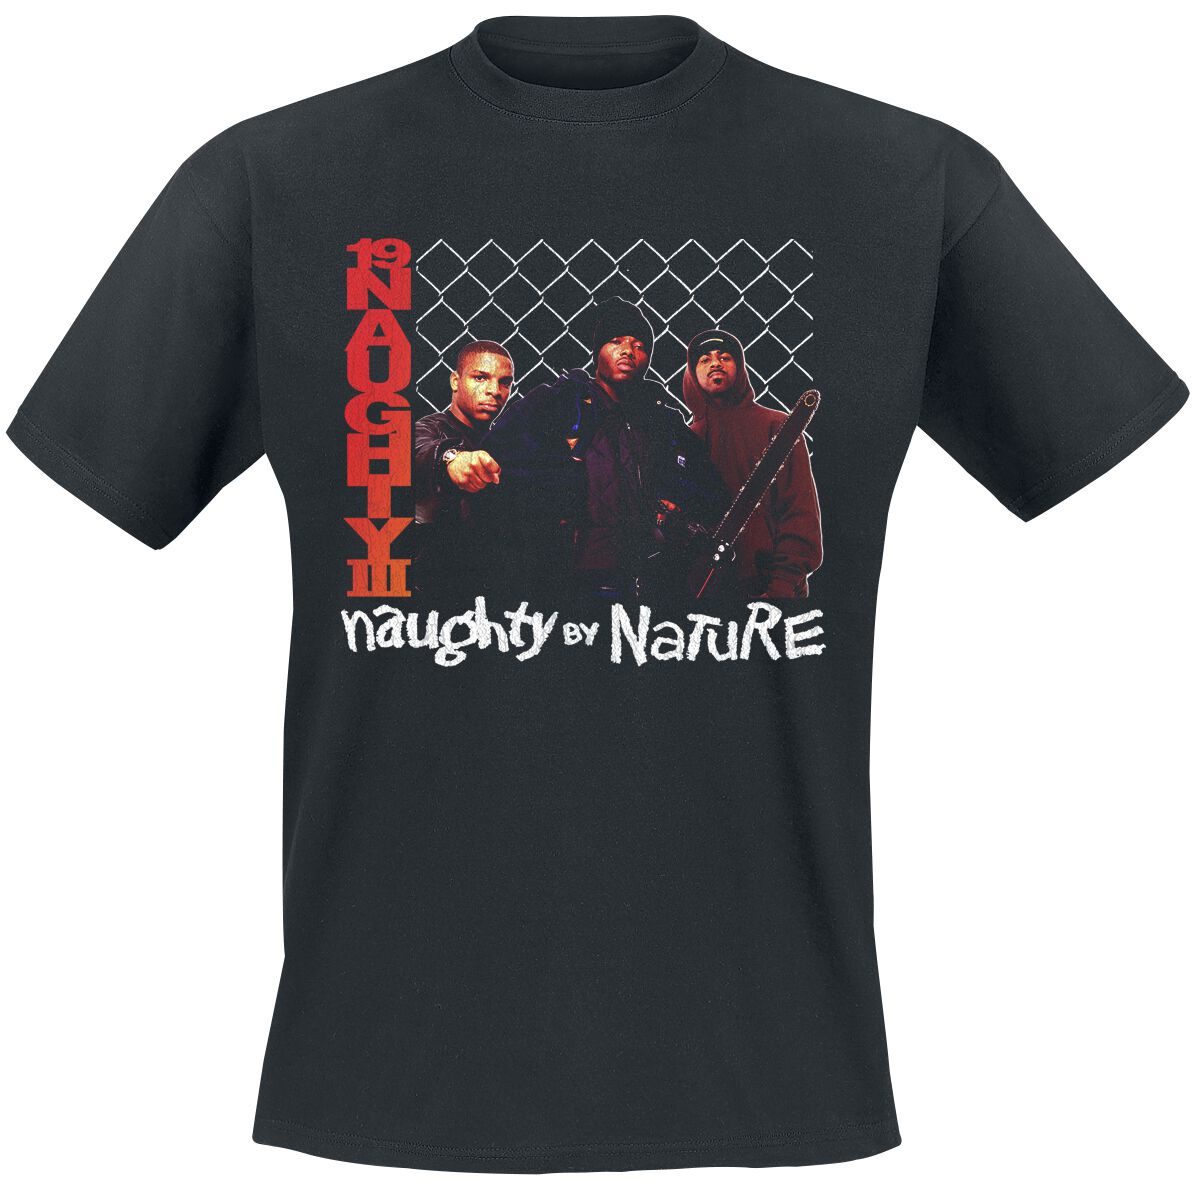 Naughty by Nature 19 Naughty 111 T-Shirt schwarz in M